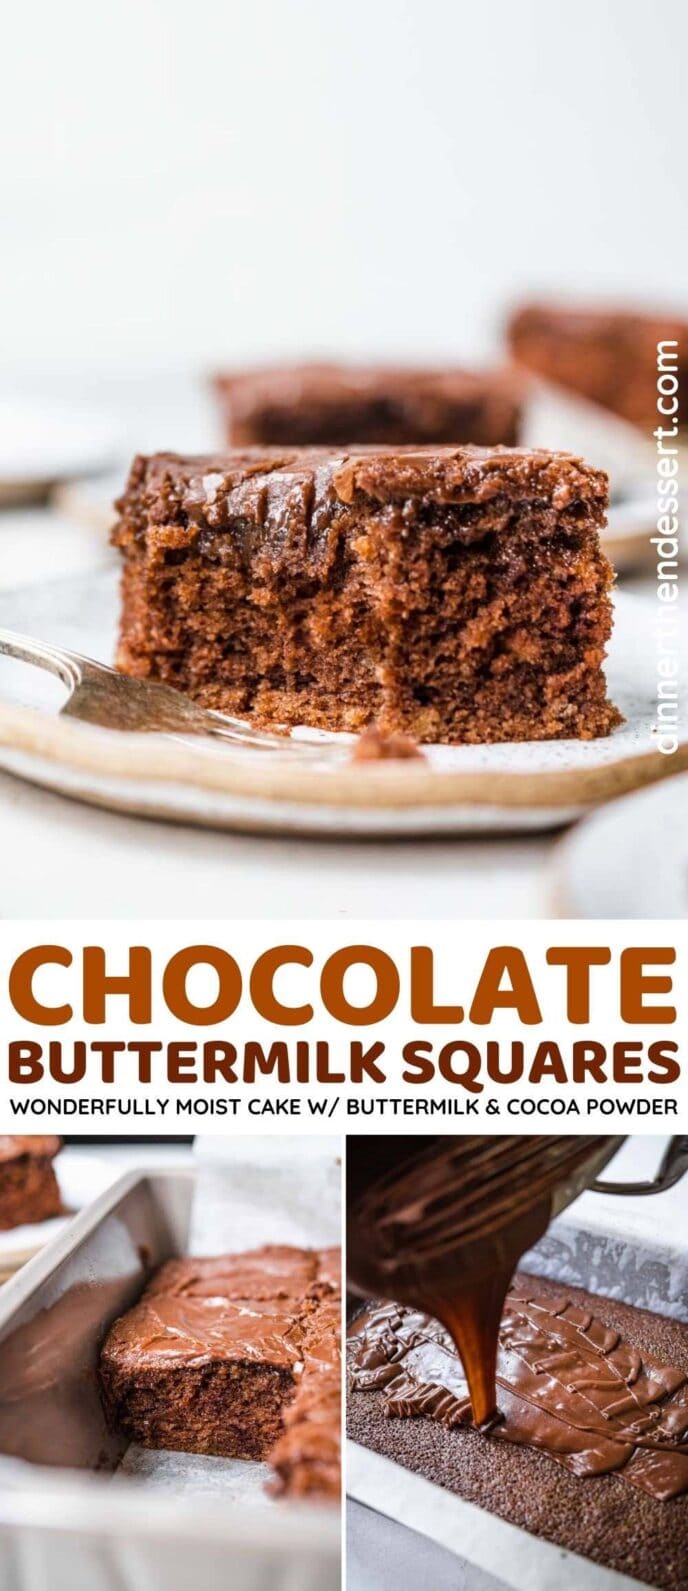 Chocolate Buttermilk Squares collage